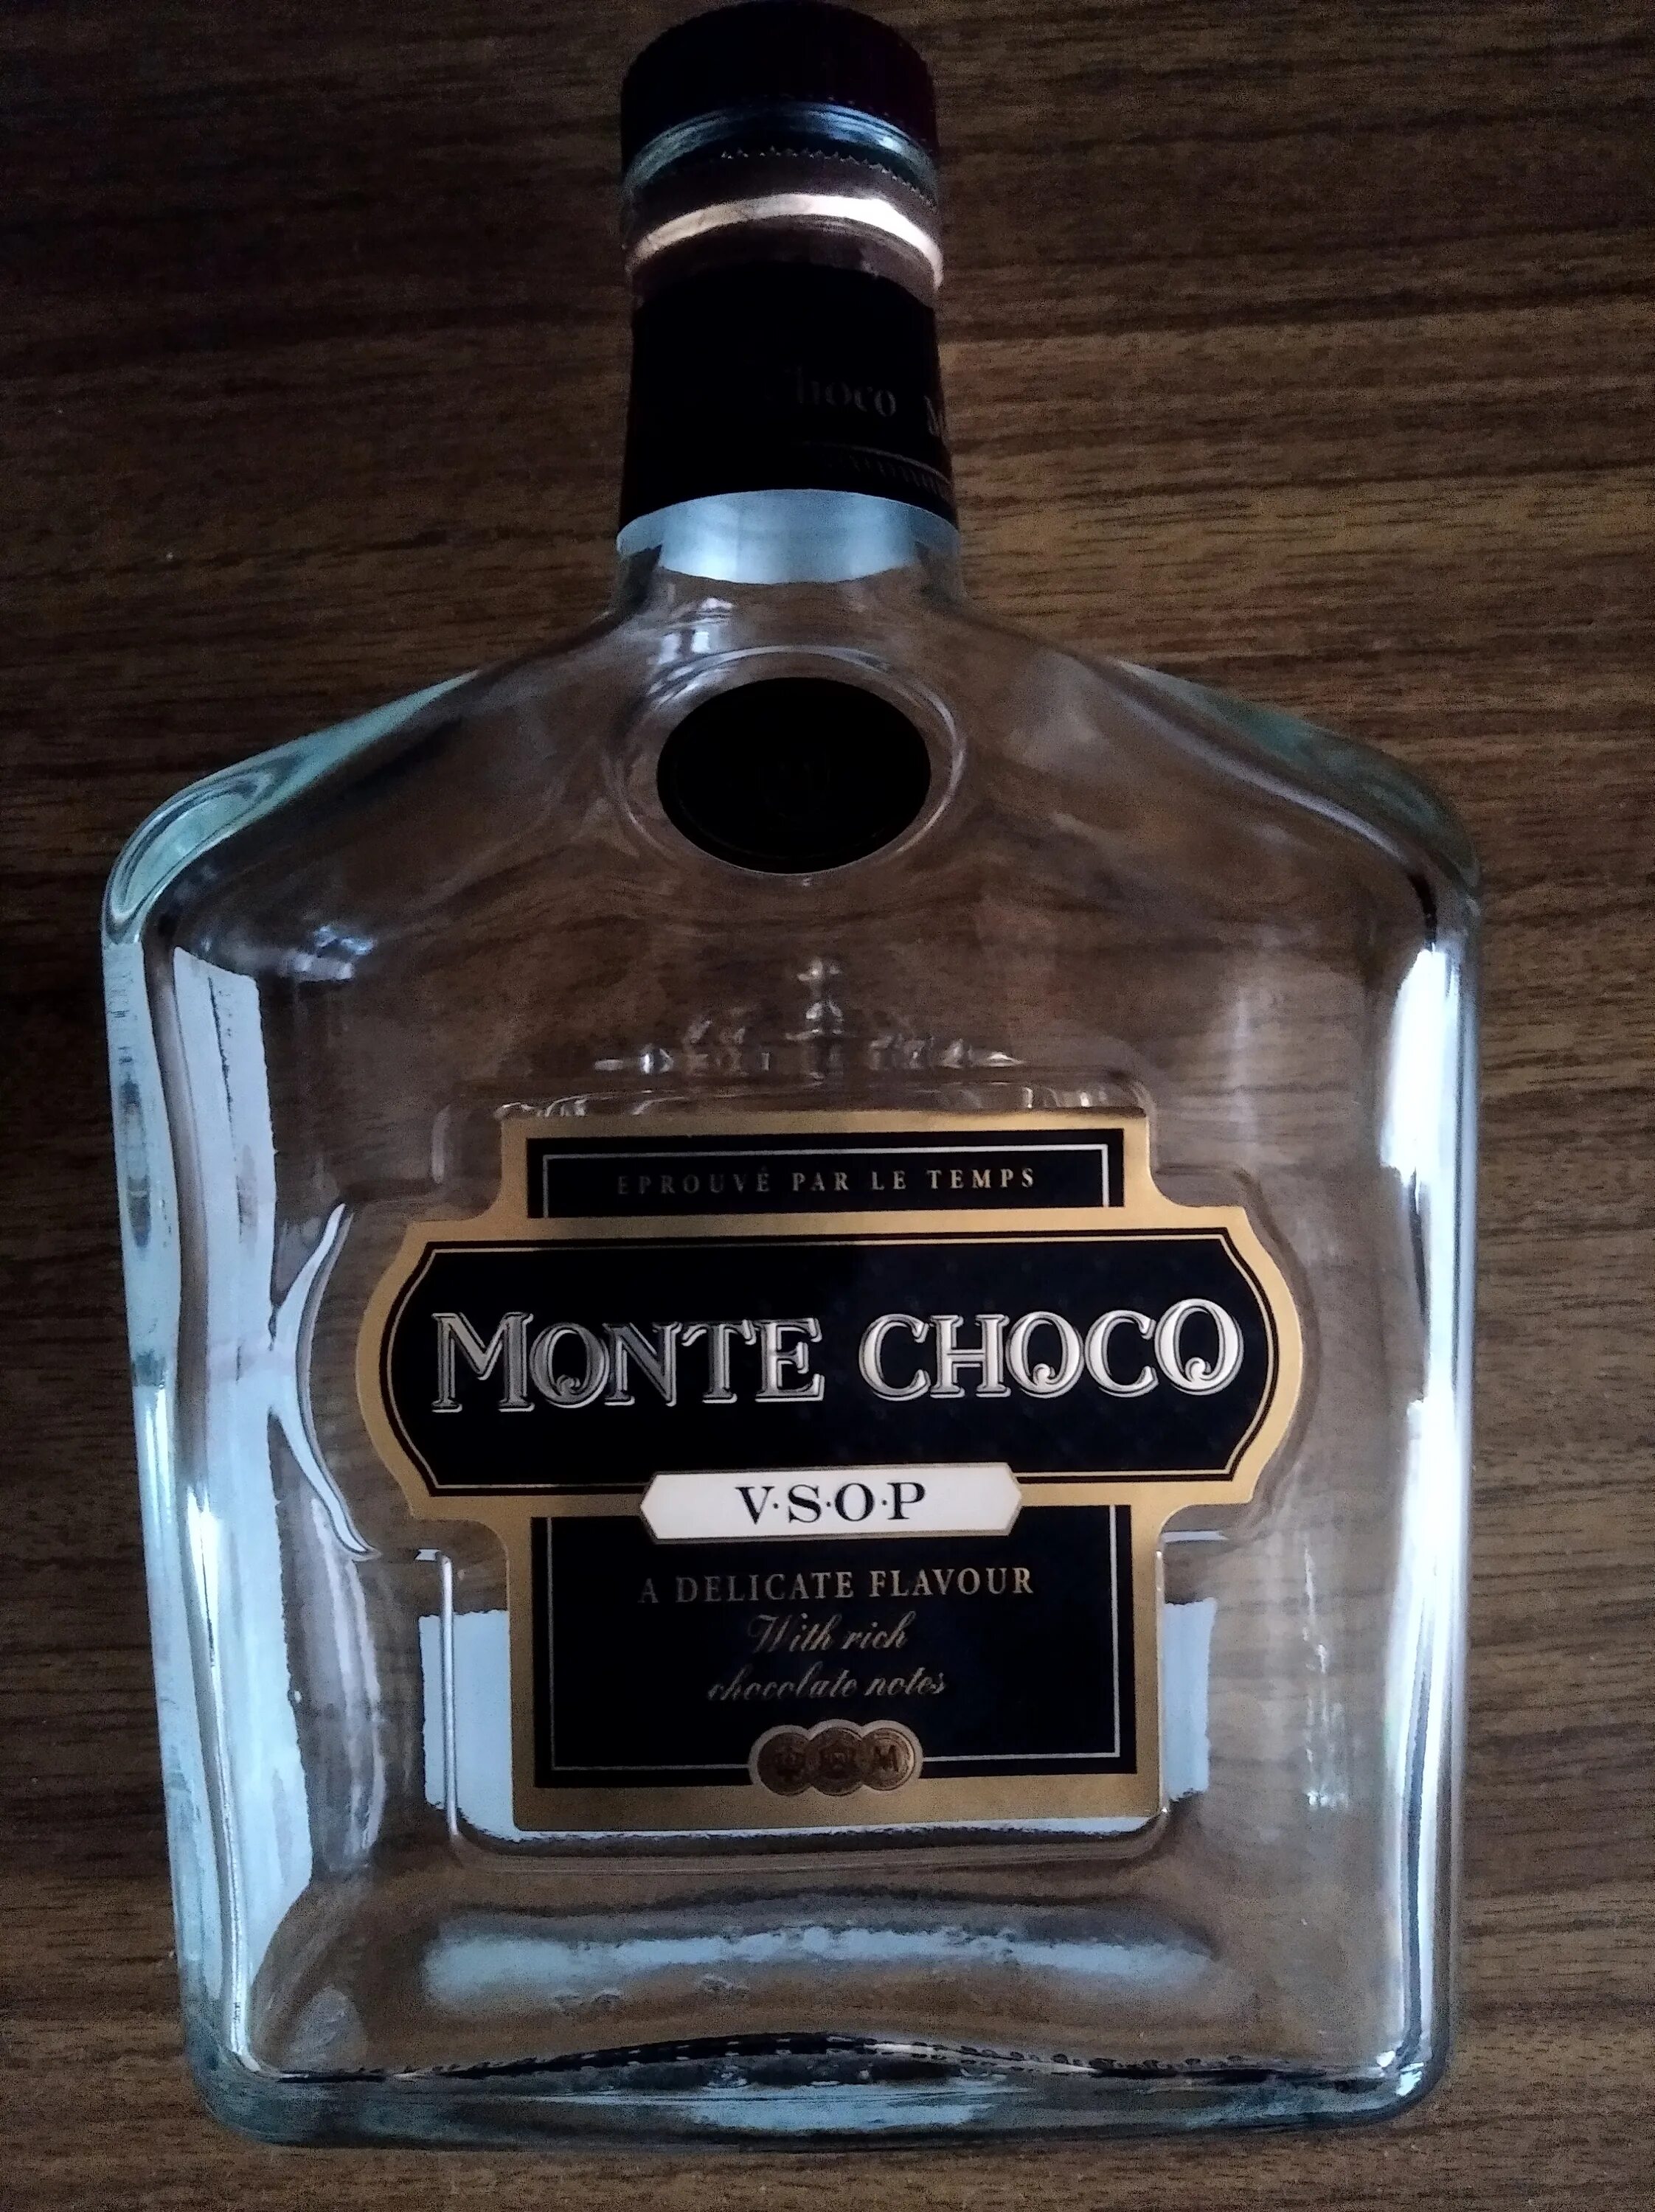 Monte choco irish. Монте Чоко коньяк. Монте шоко 5. Коньячный напиток Монте шоко. Коньяк Монте Чоко VSOP.